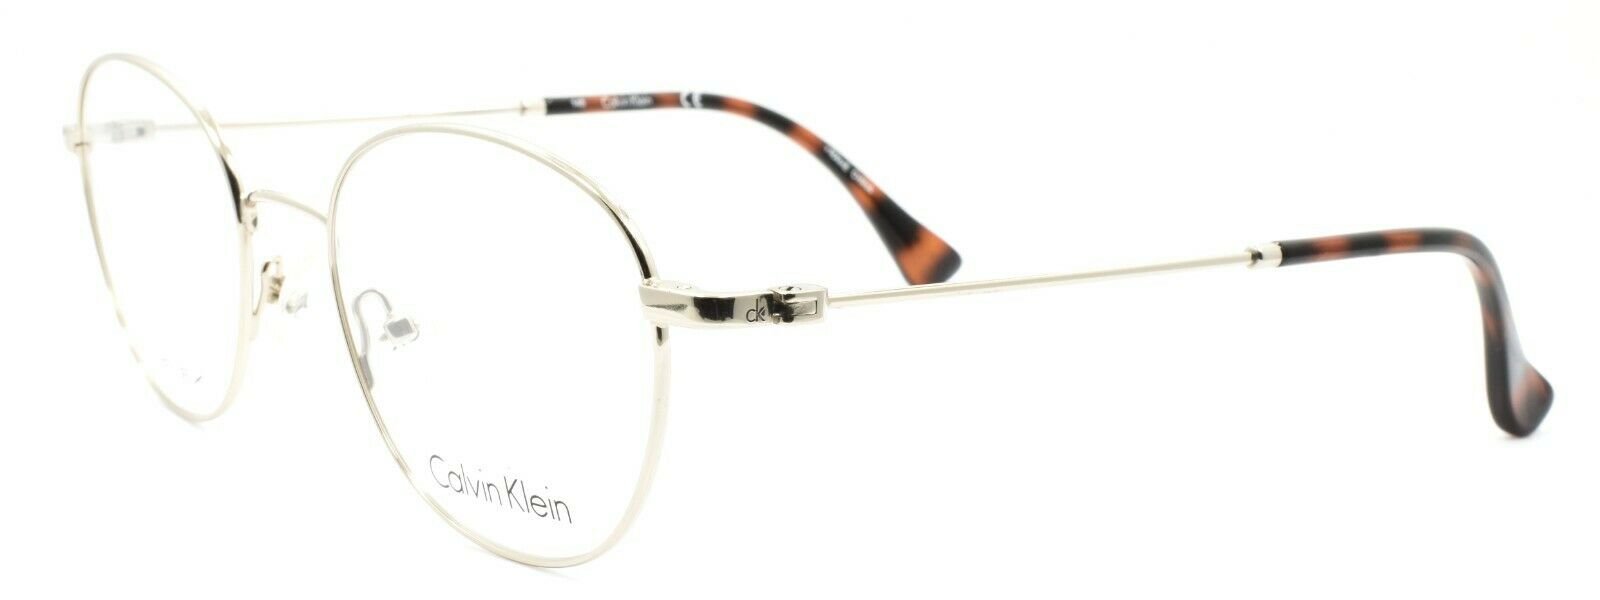 1-Calvin Klein CK5437 714 Men's Eyeglasses Frames FLEXIBLE 50-20-145 Light Gold-750779102138-IKSpecs